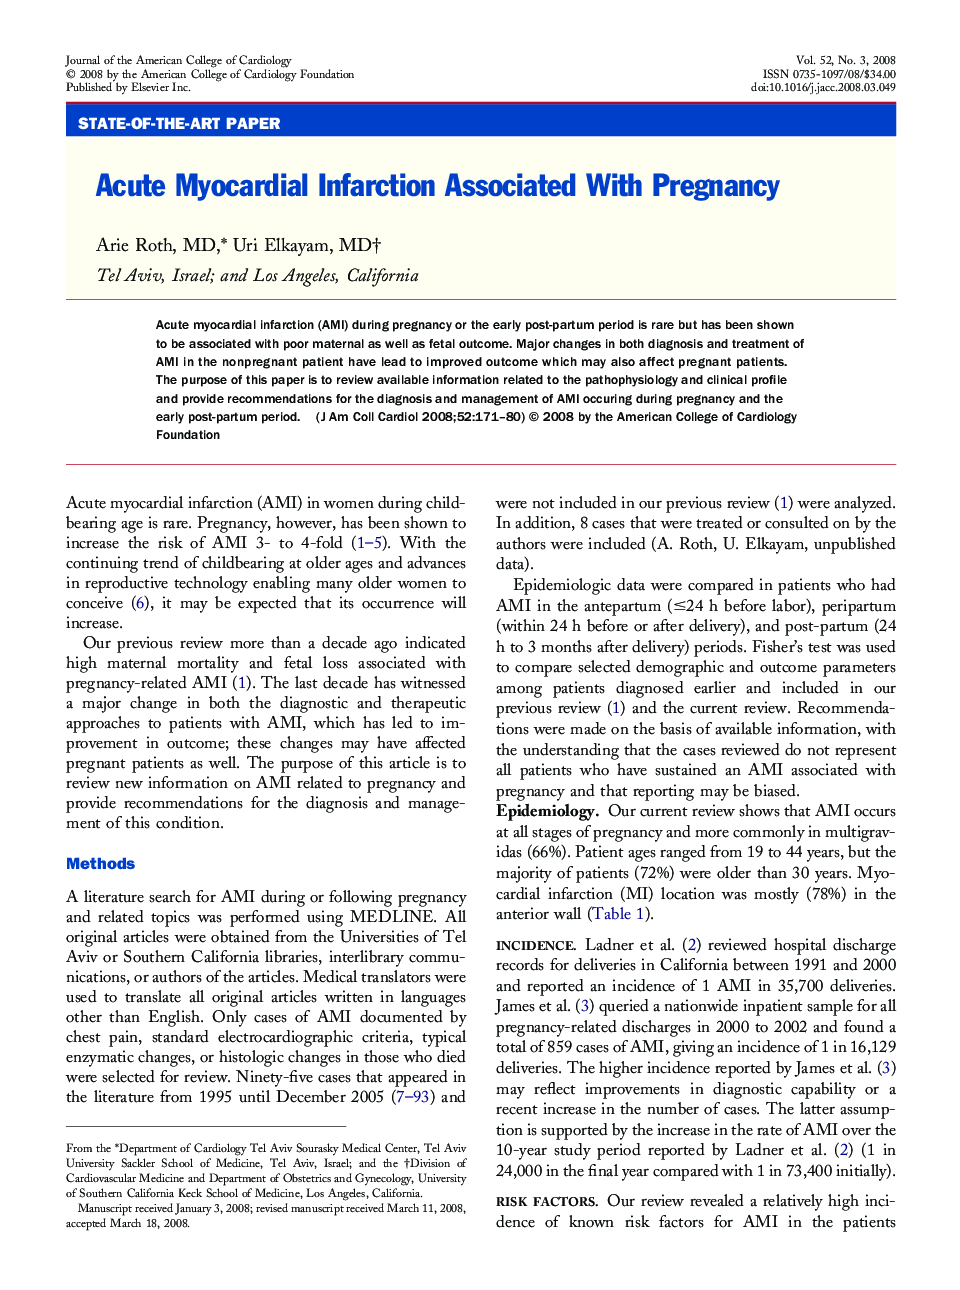 Acute Myocardial Infarction Associated With Pregnancy